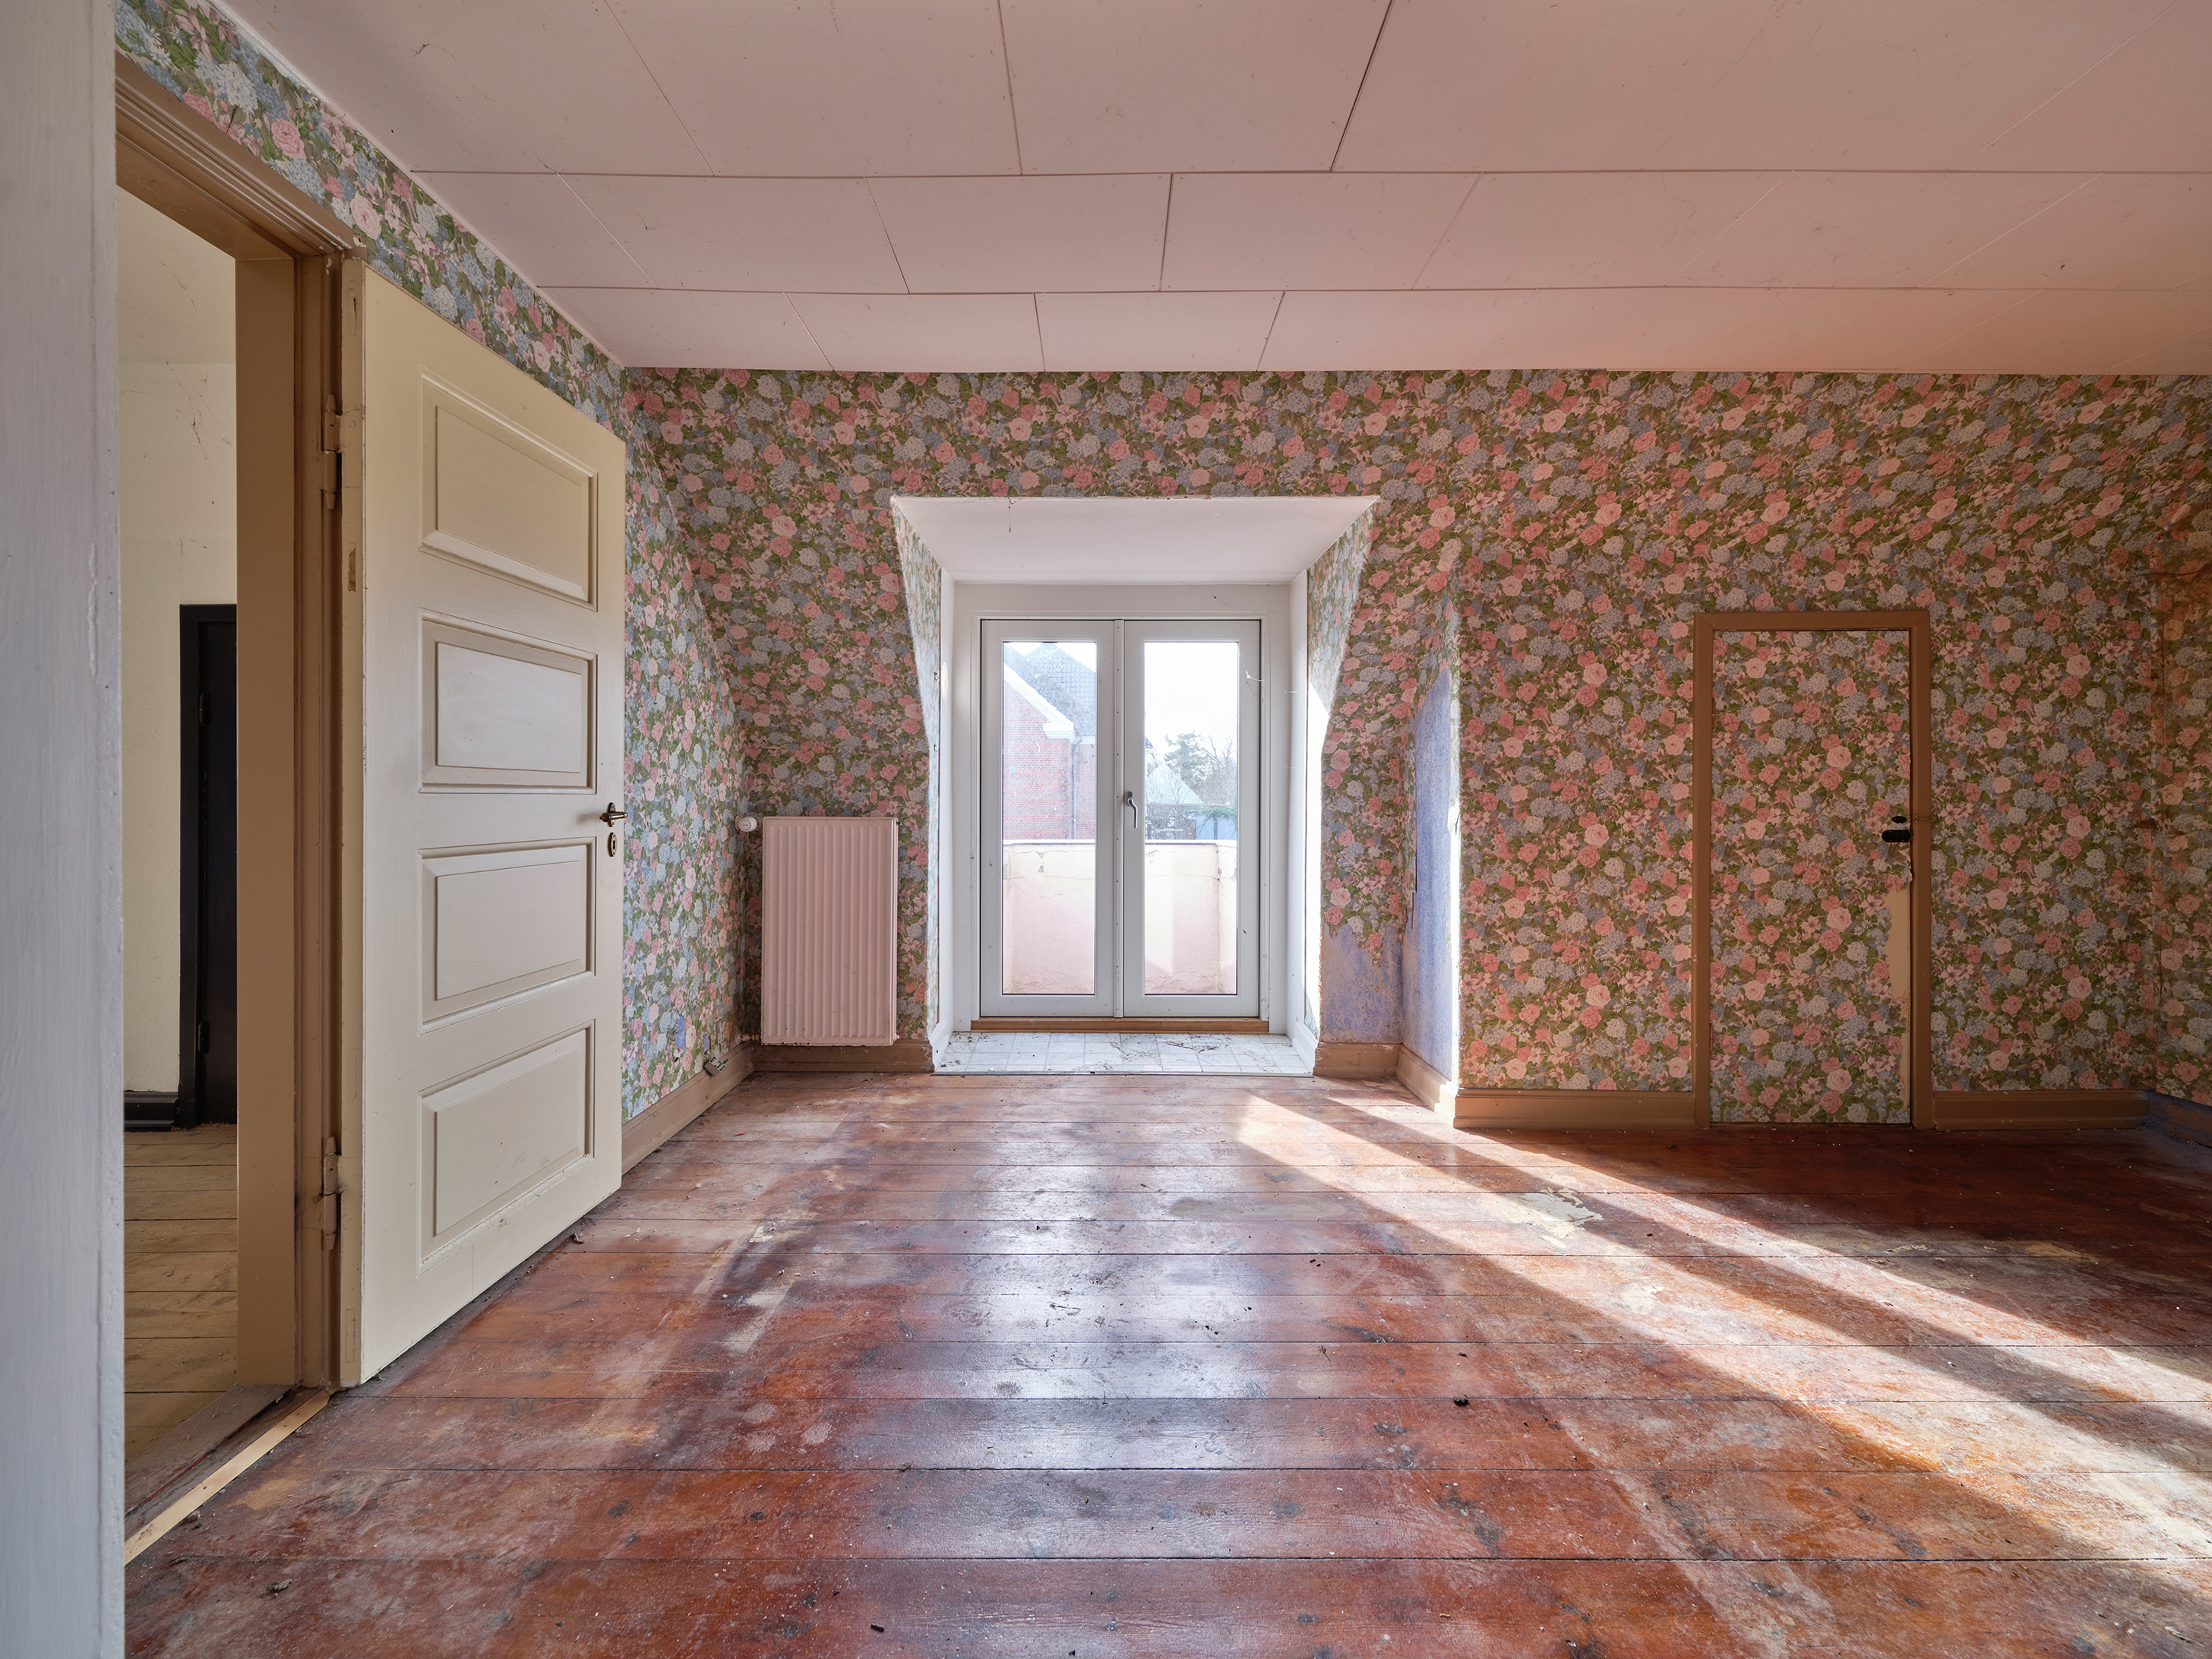 Ejnar Oernsholt's private home interior